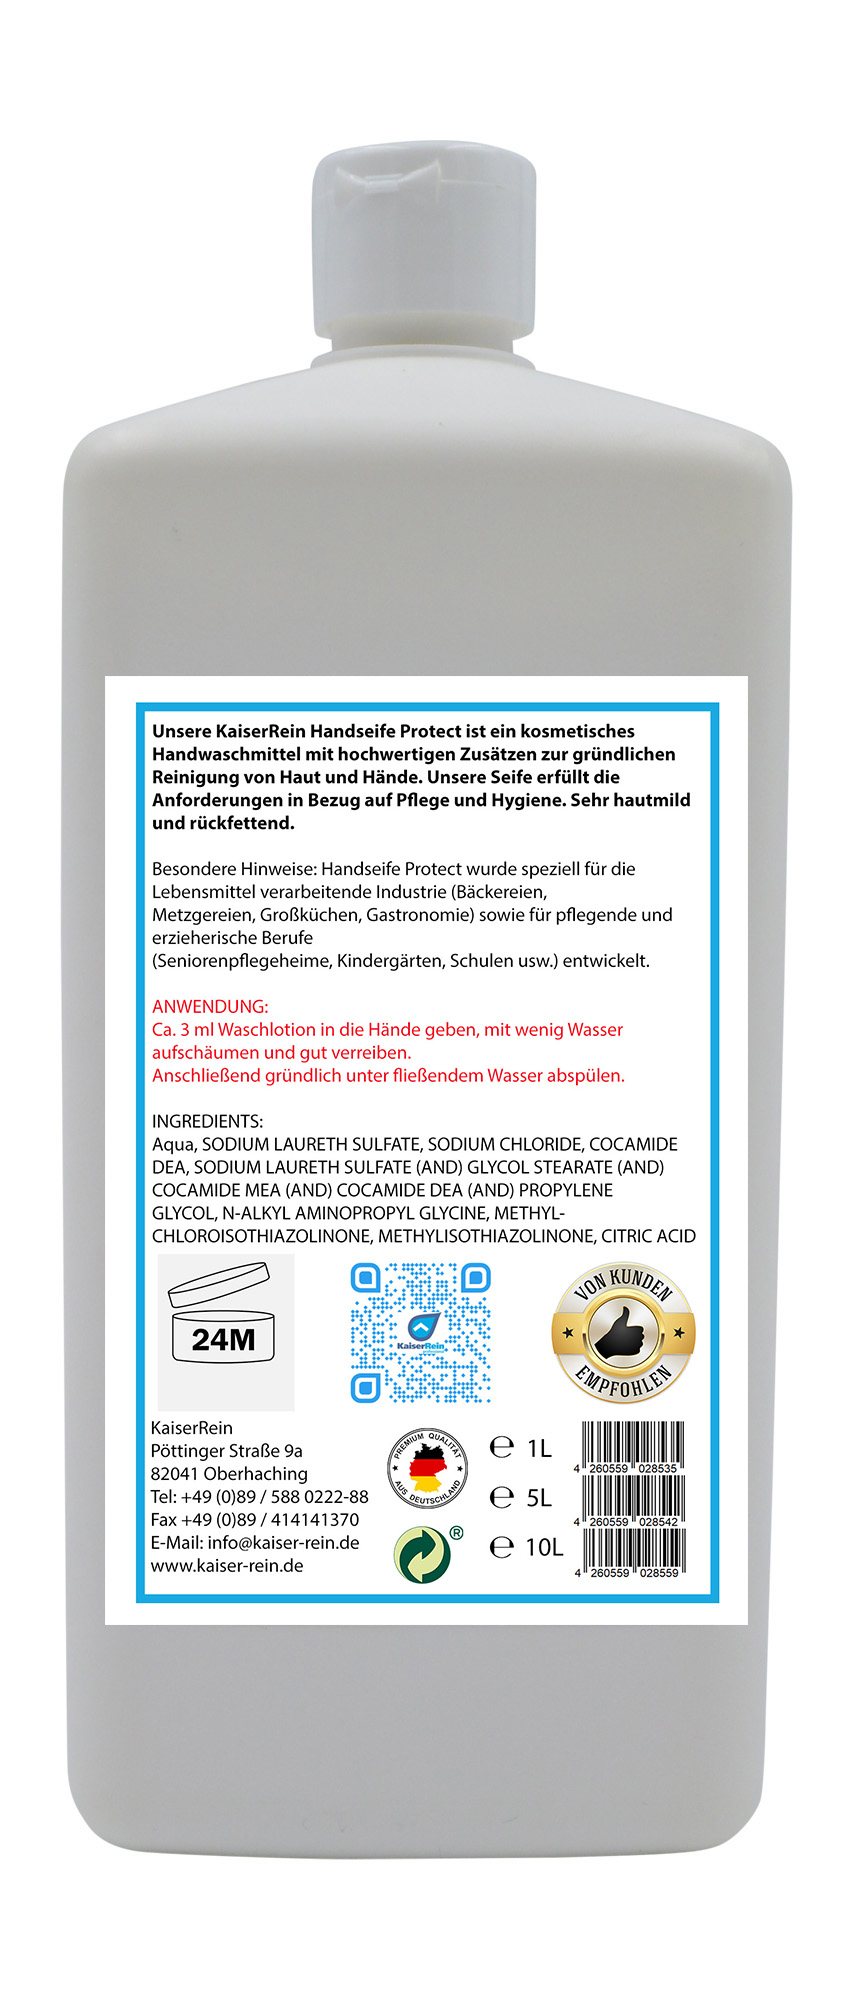 Handseife Protect 1 L wirkt antibakteriell Hygienische hautschonende Handseife